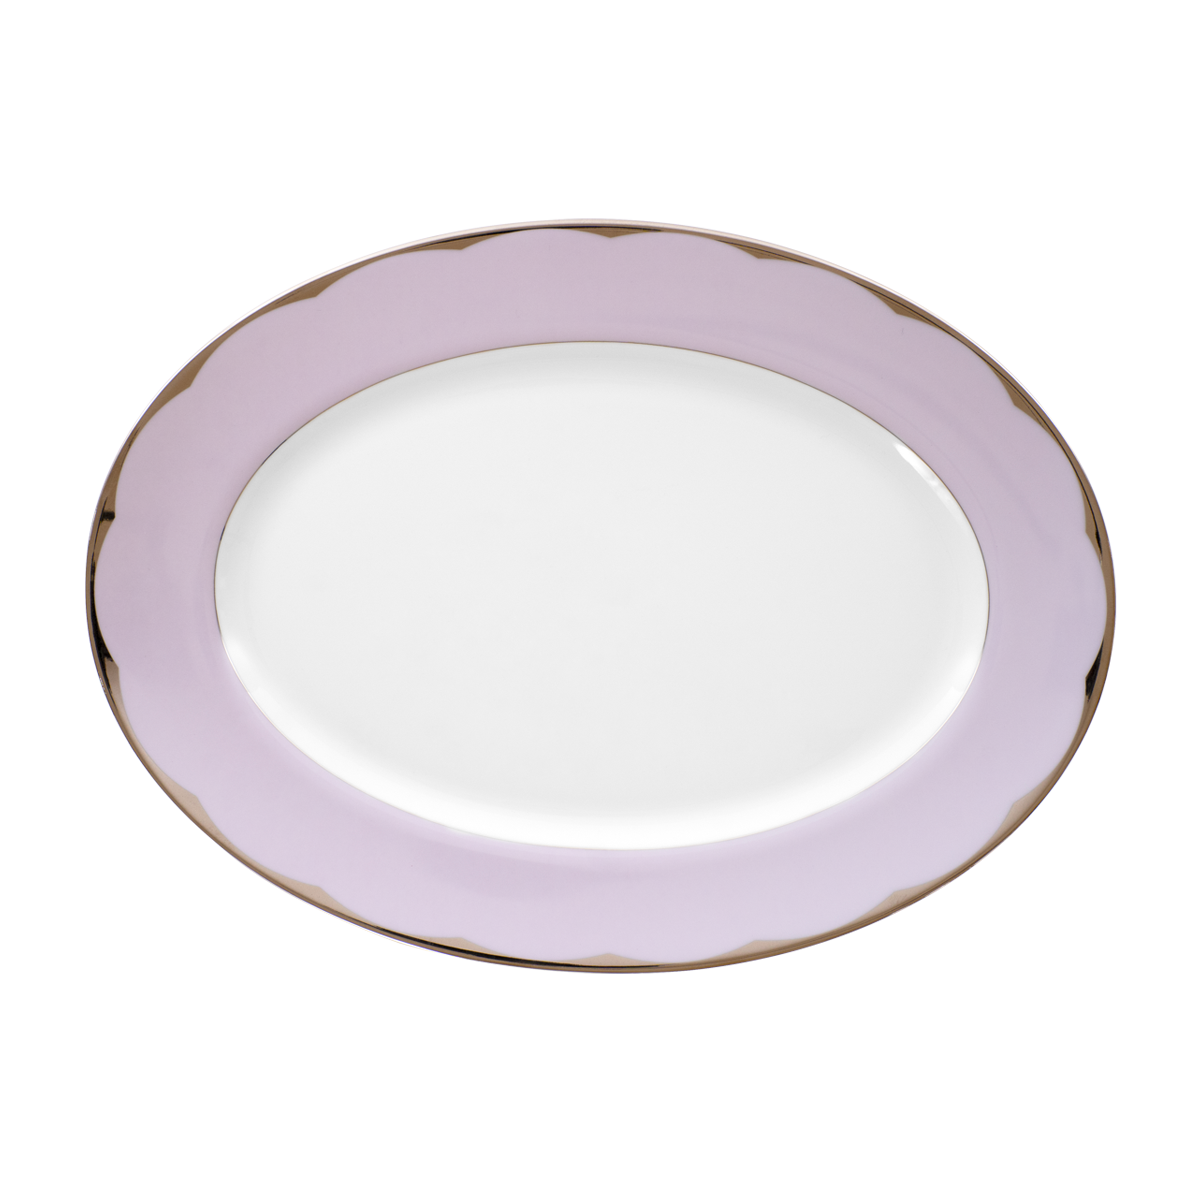 Illusion Large Oval Dish